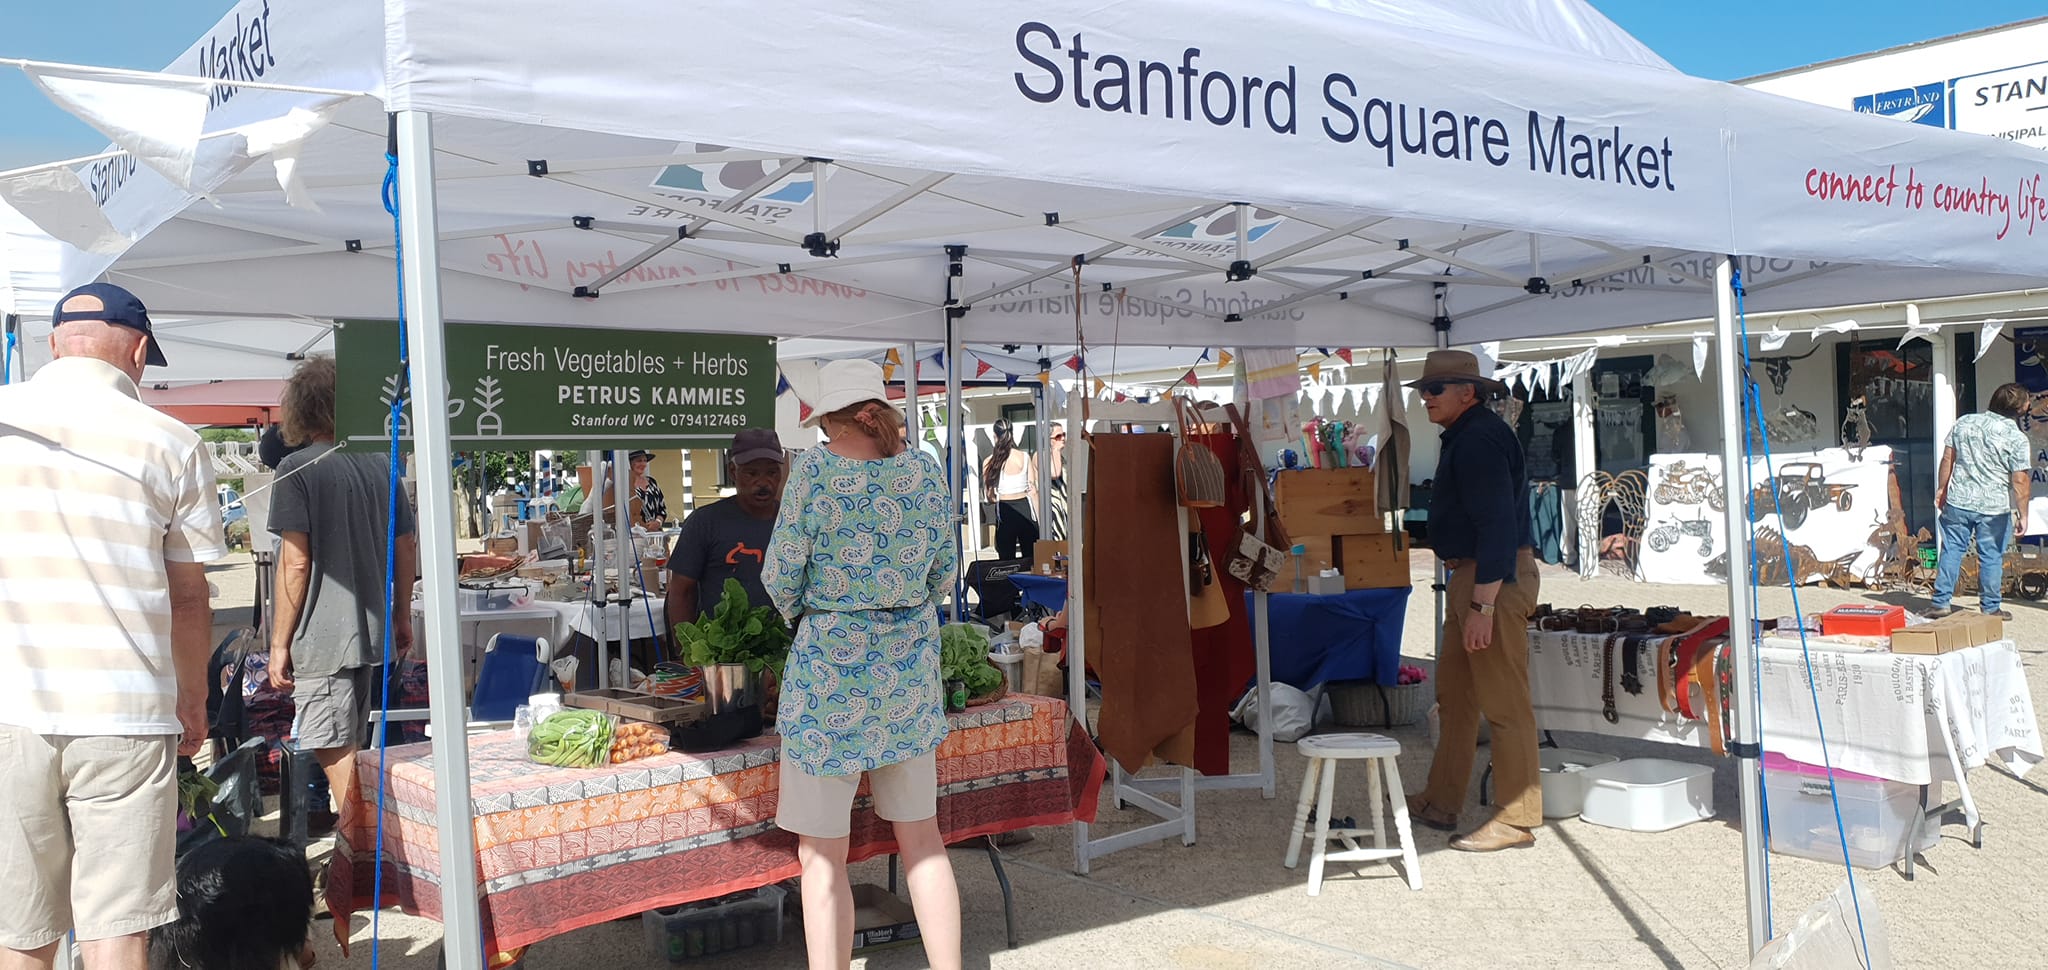 Stanford Square Market